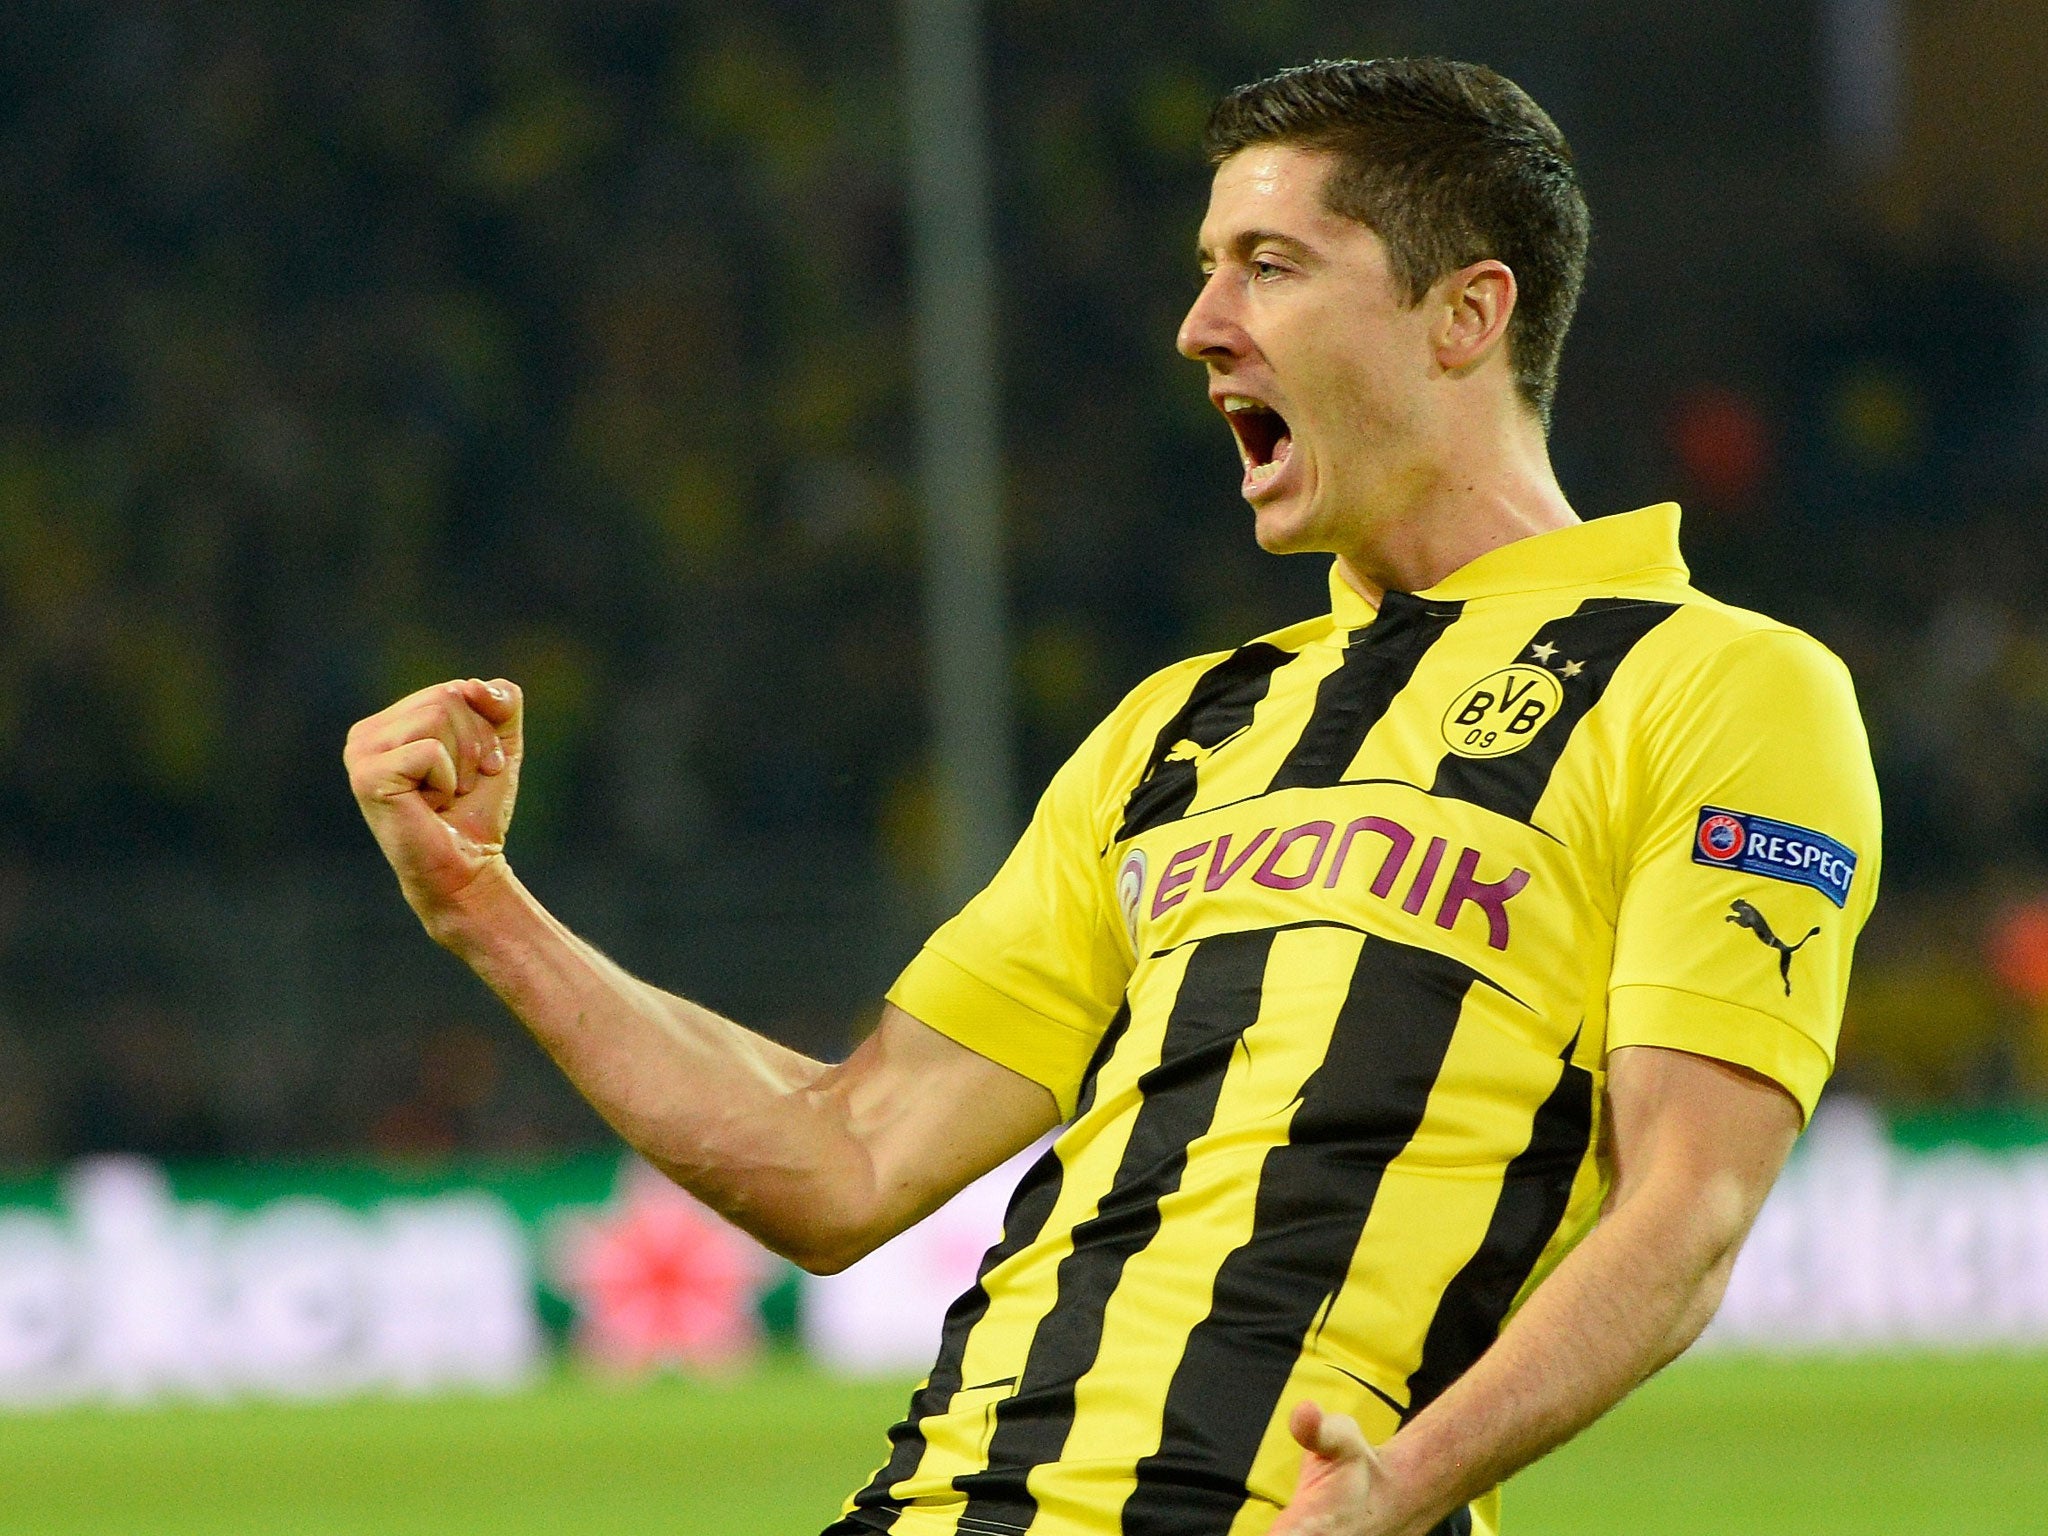  Robert Lewandowski celebrates a goal for Borussia Dortmund during a match.